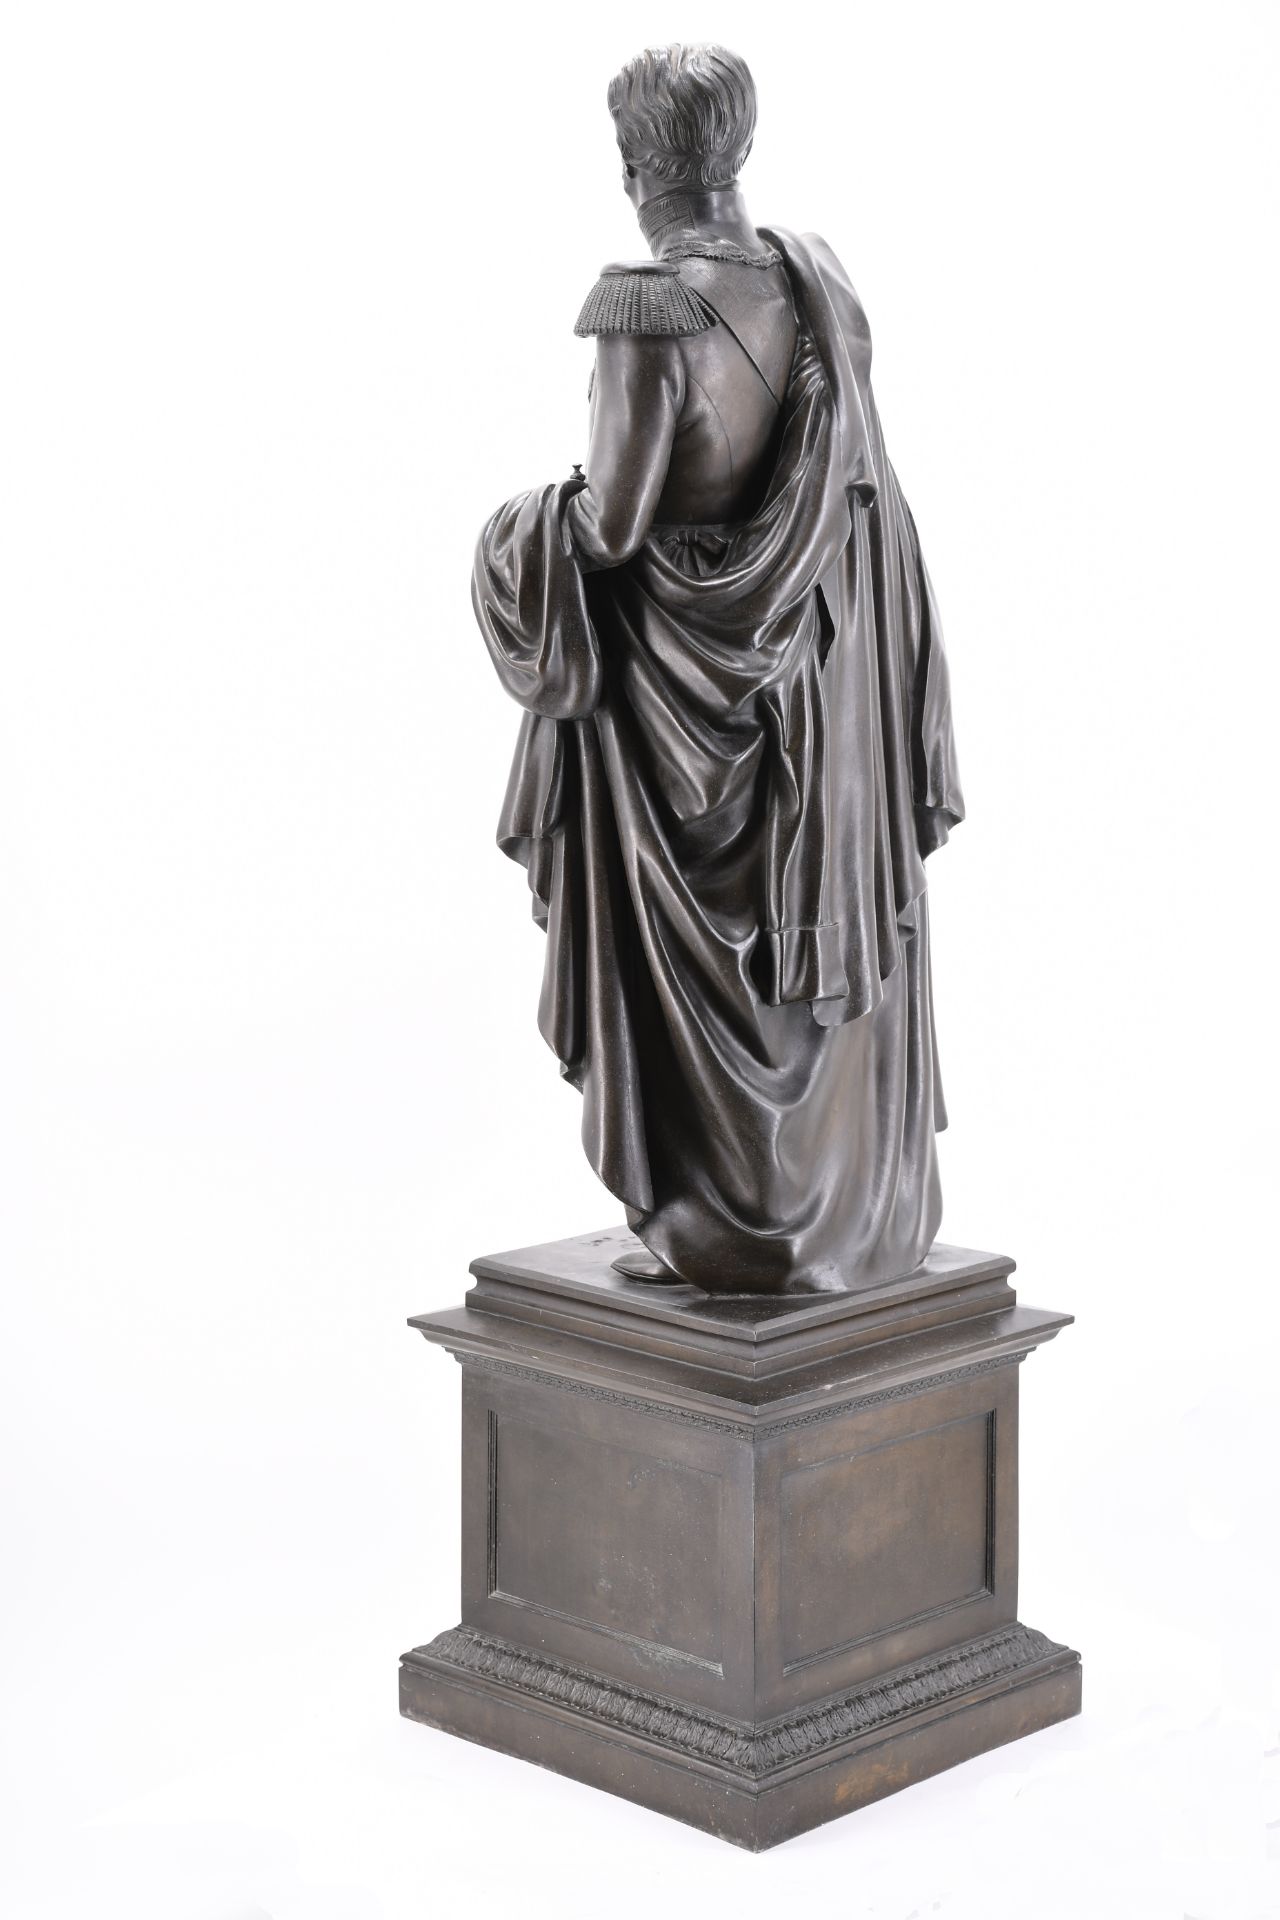 Carl Cauer 1828 Bonn - 1885 Bad Kreuznach: Statue of King Frederick William IV of Prussia - Image 12 of 12